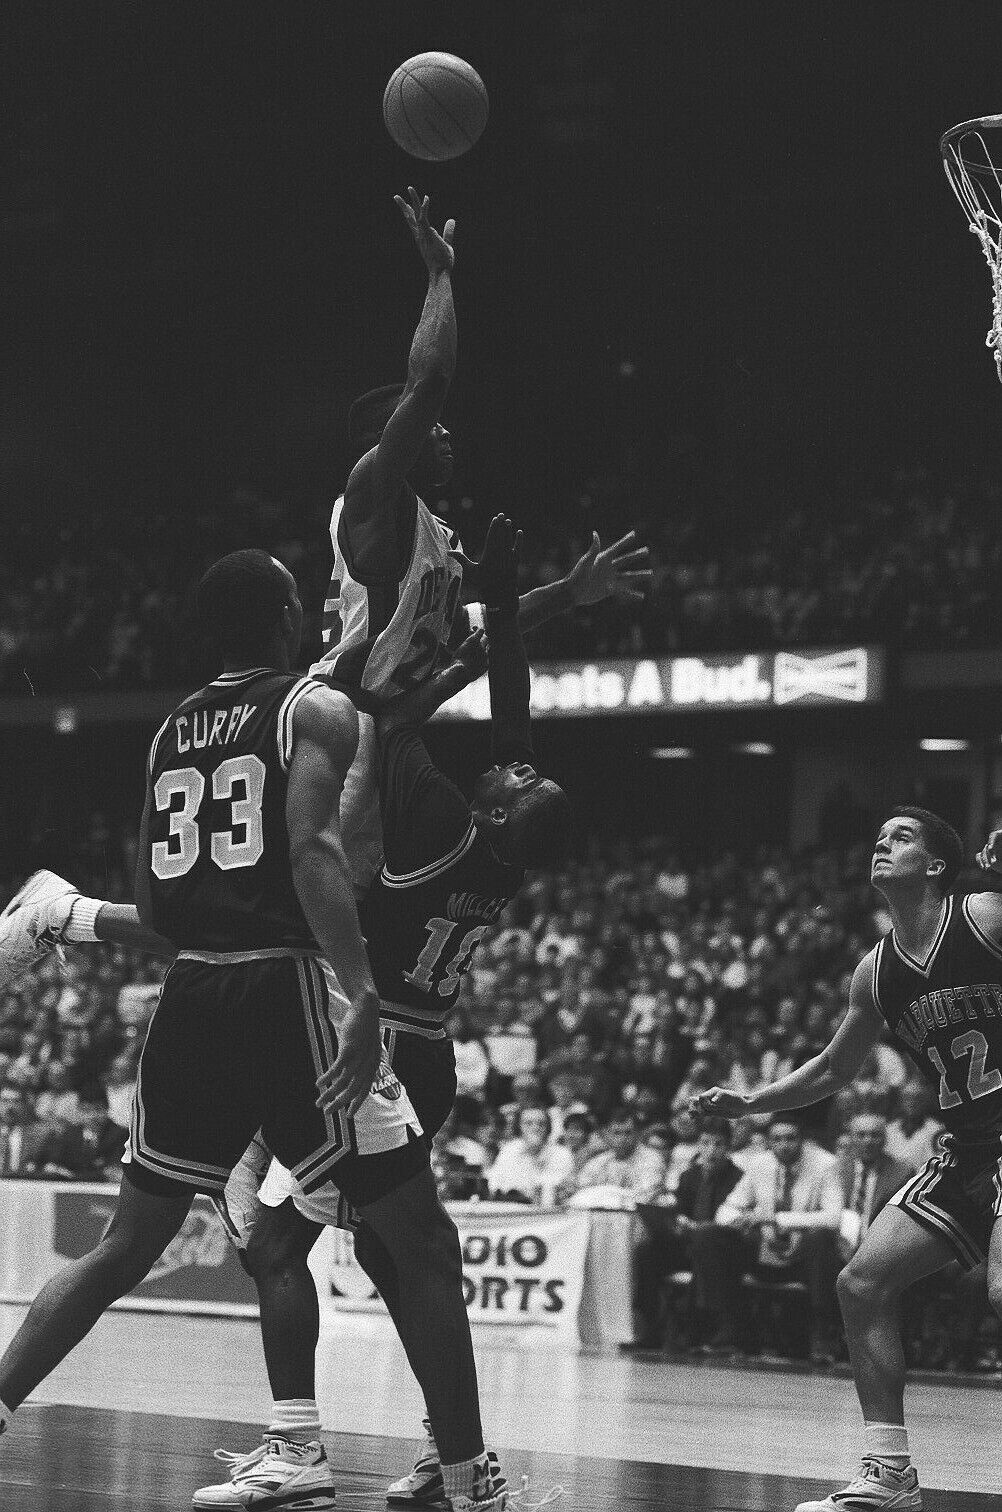 LD126-15 1992 College Basketball DePaul Marquette (140) ORIG 35mm B&W NEGATIVES Без бренда - фотография #10